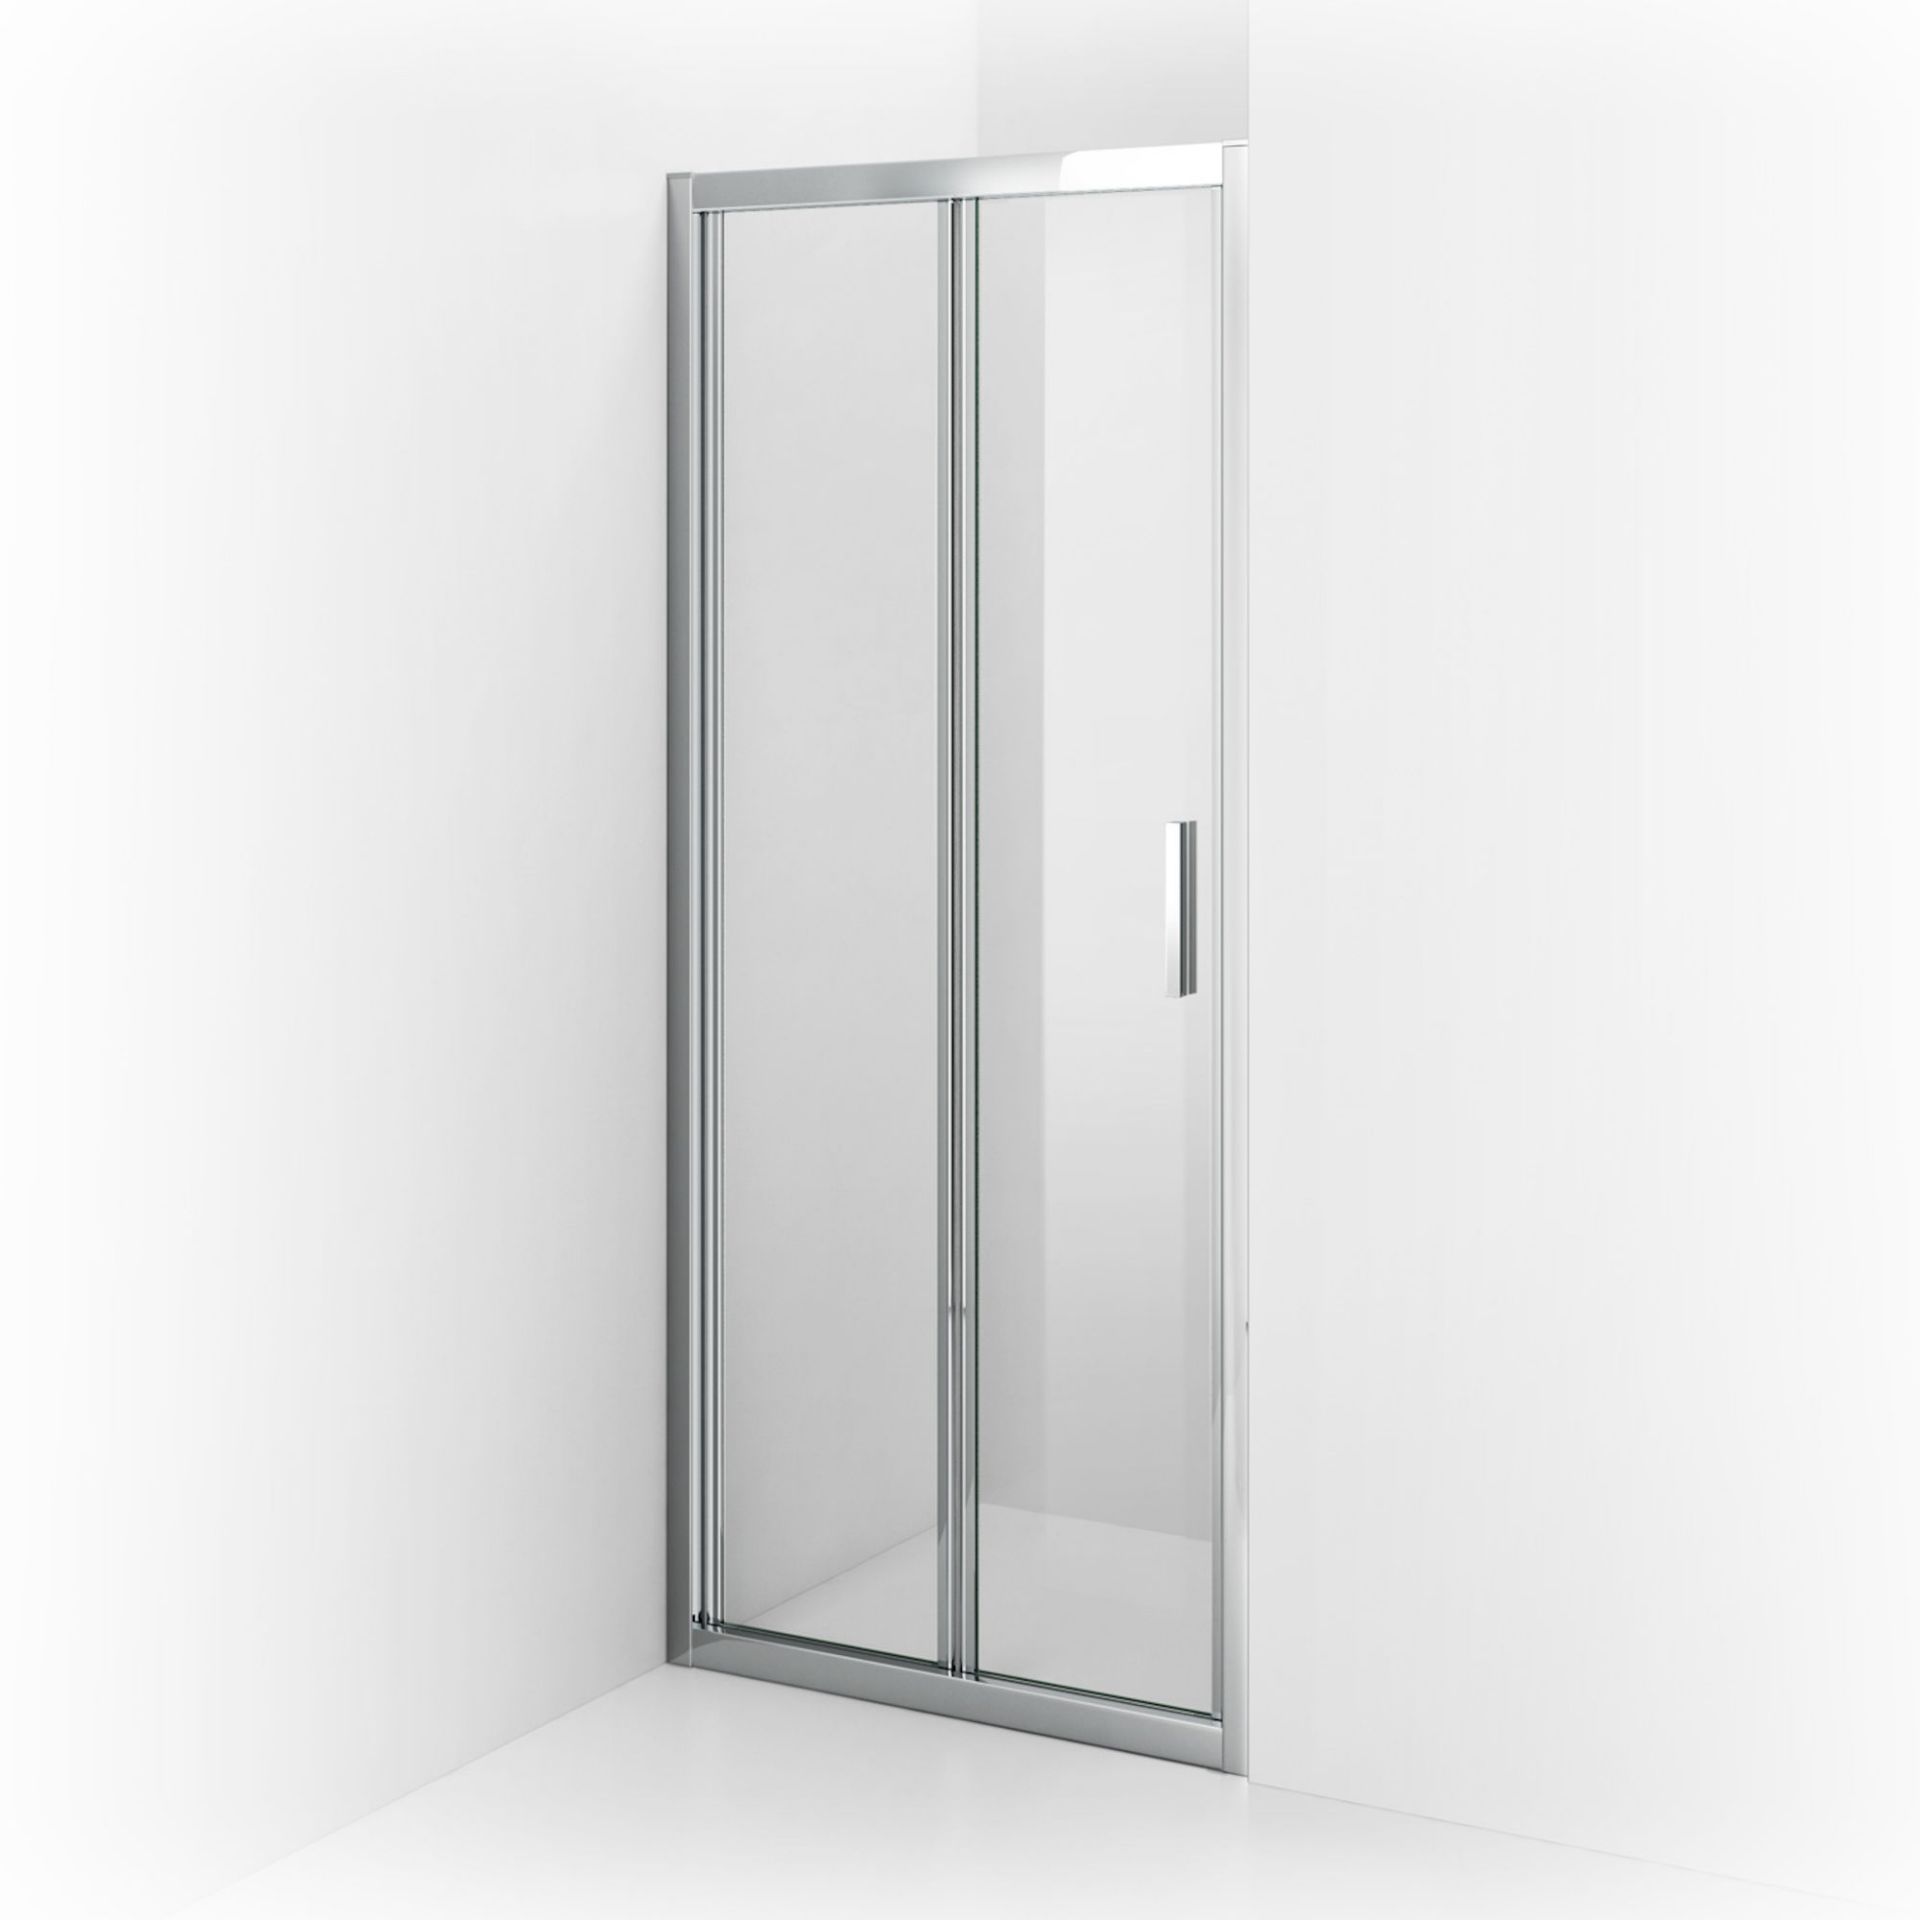 (ED24) Elements EasyClean Bi Fold Shower Door 760mm - 6mm. RRP £299.99. 6mm Safety Glass - Single- - Image 4 of 4